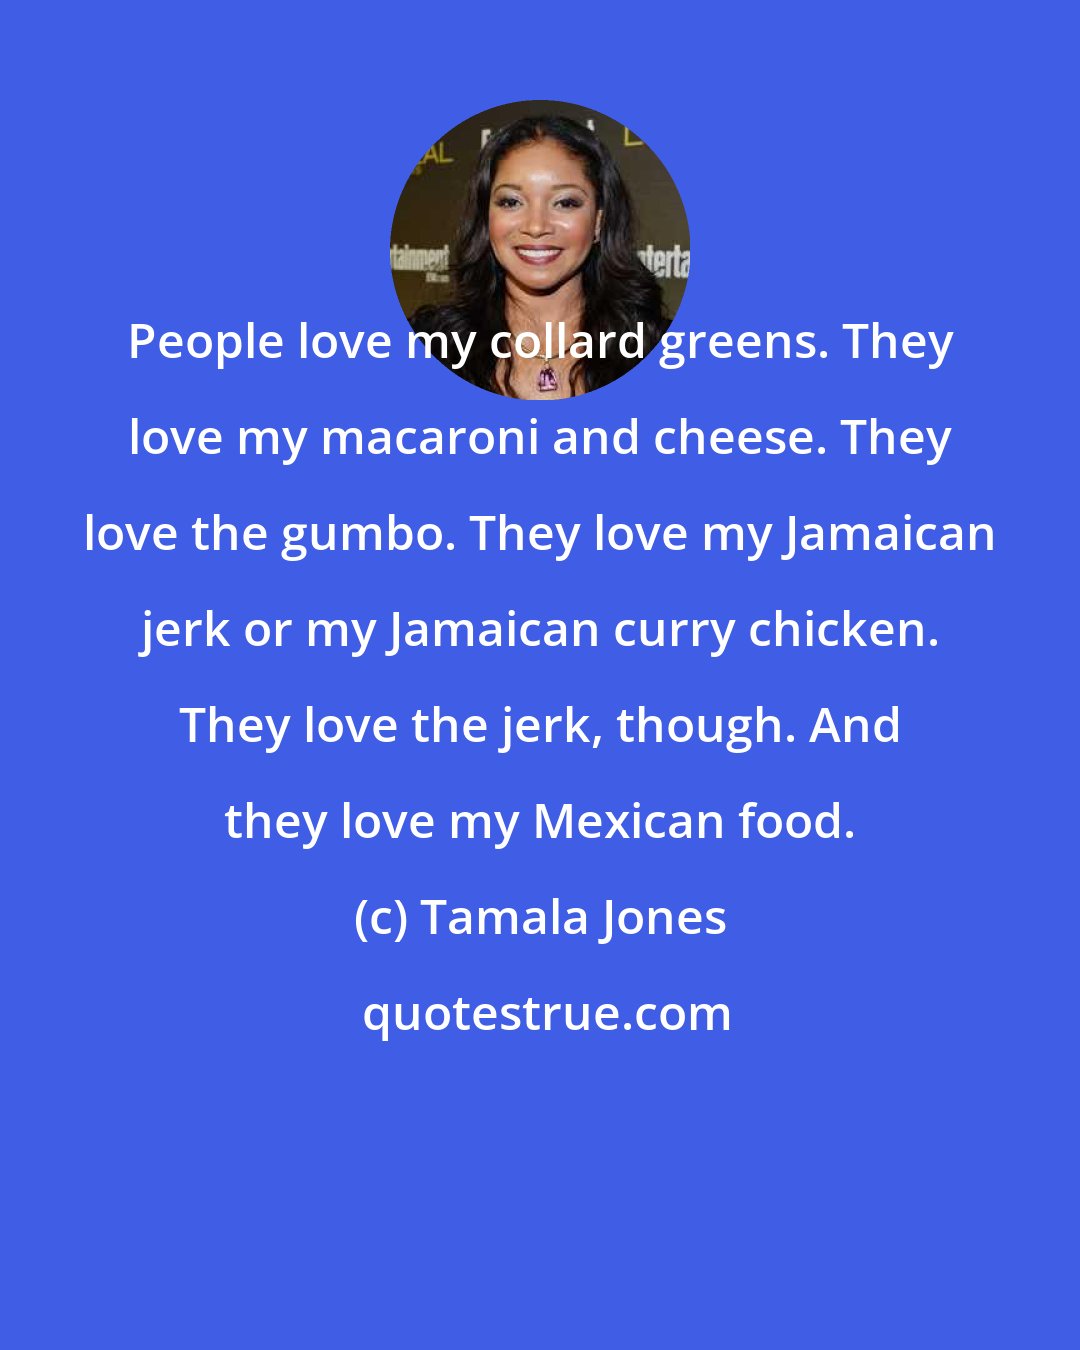 Tamala Jones: People love my collard greens. They love my macaroni and cheese. They love the gumbo. They love my Jamaican jerk or my Jamaican curry chicken. They love the jerk, though. And they love my Mexican food.